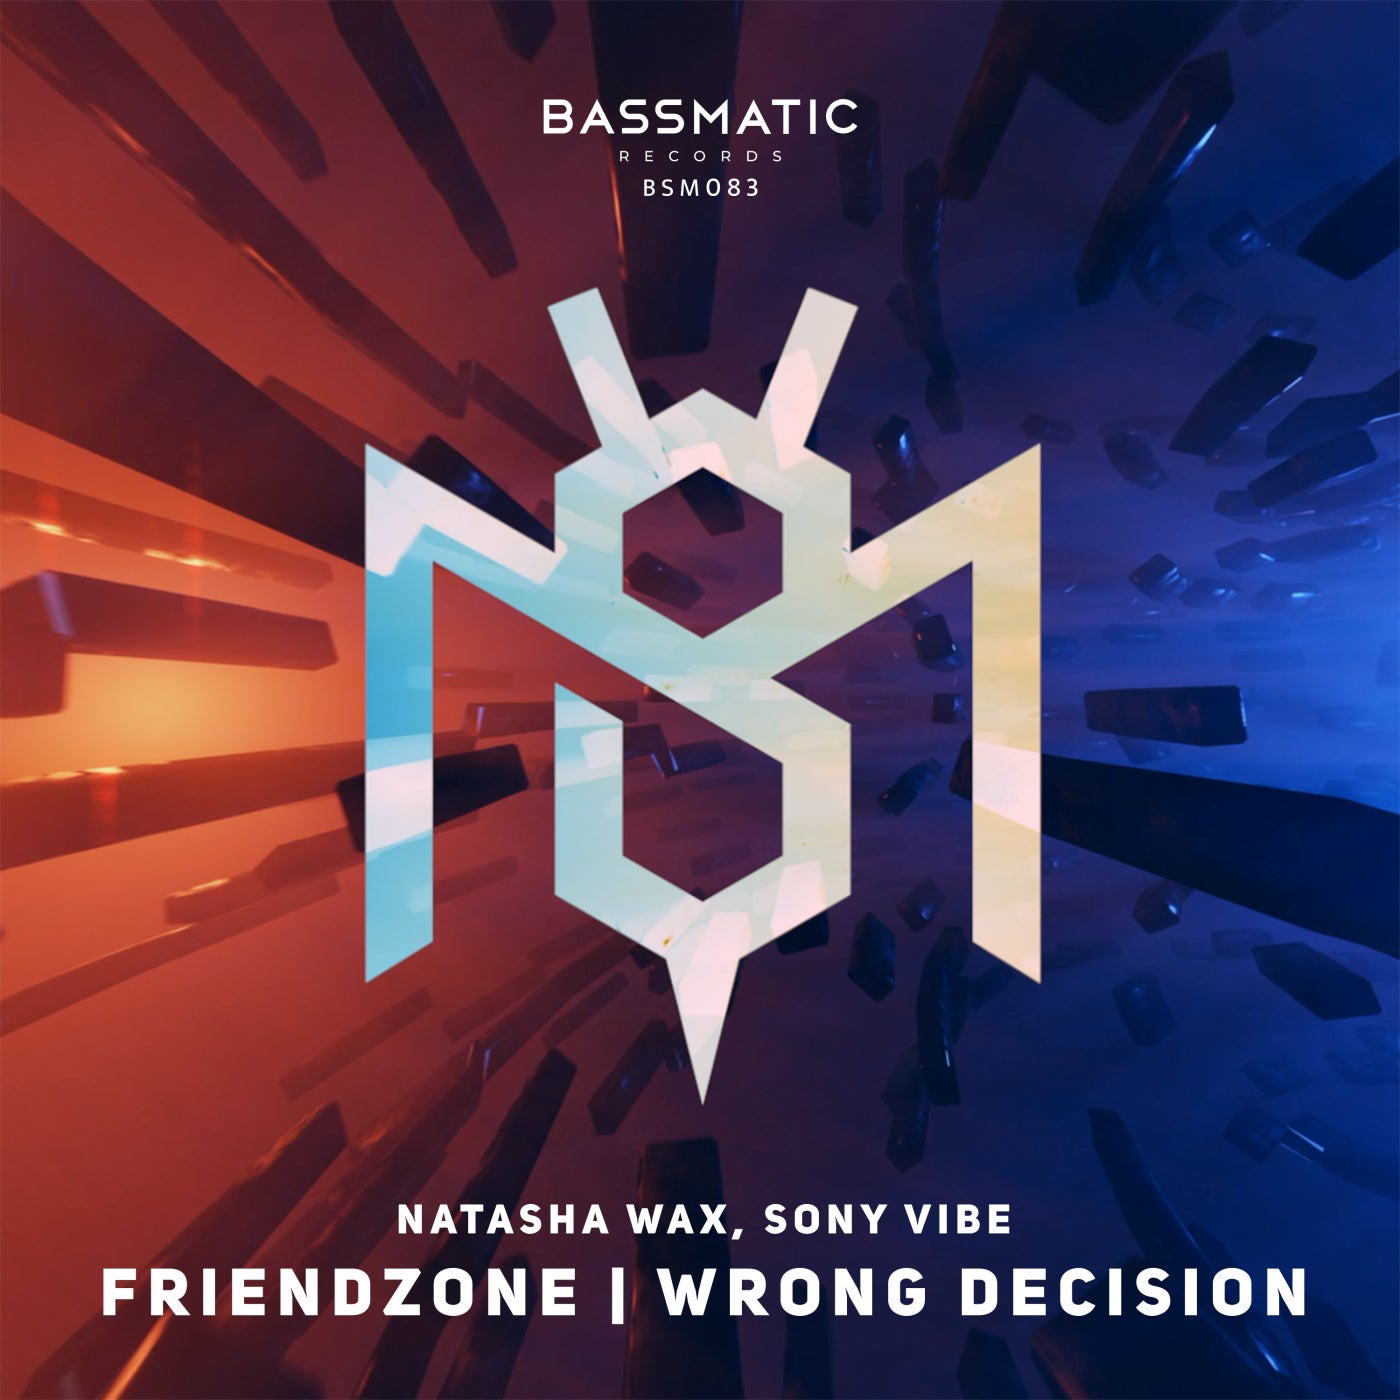 Friendzone / Wrong Decision